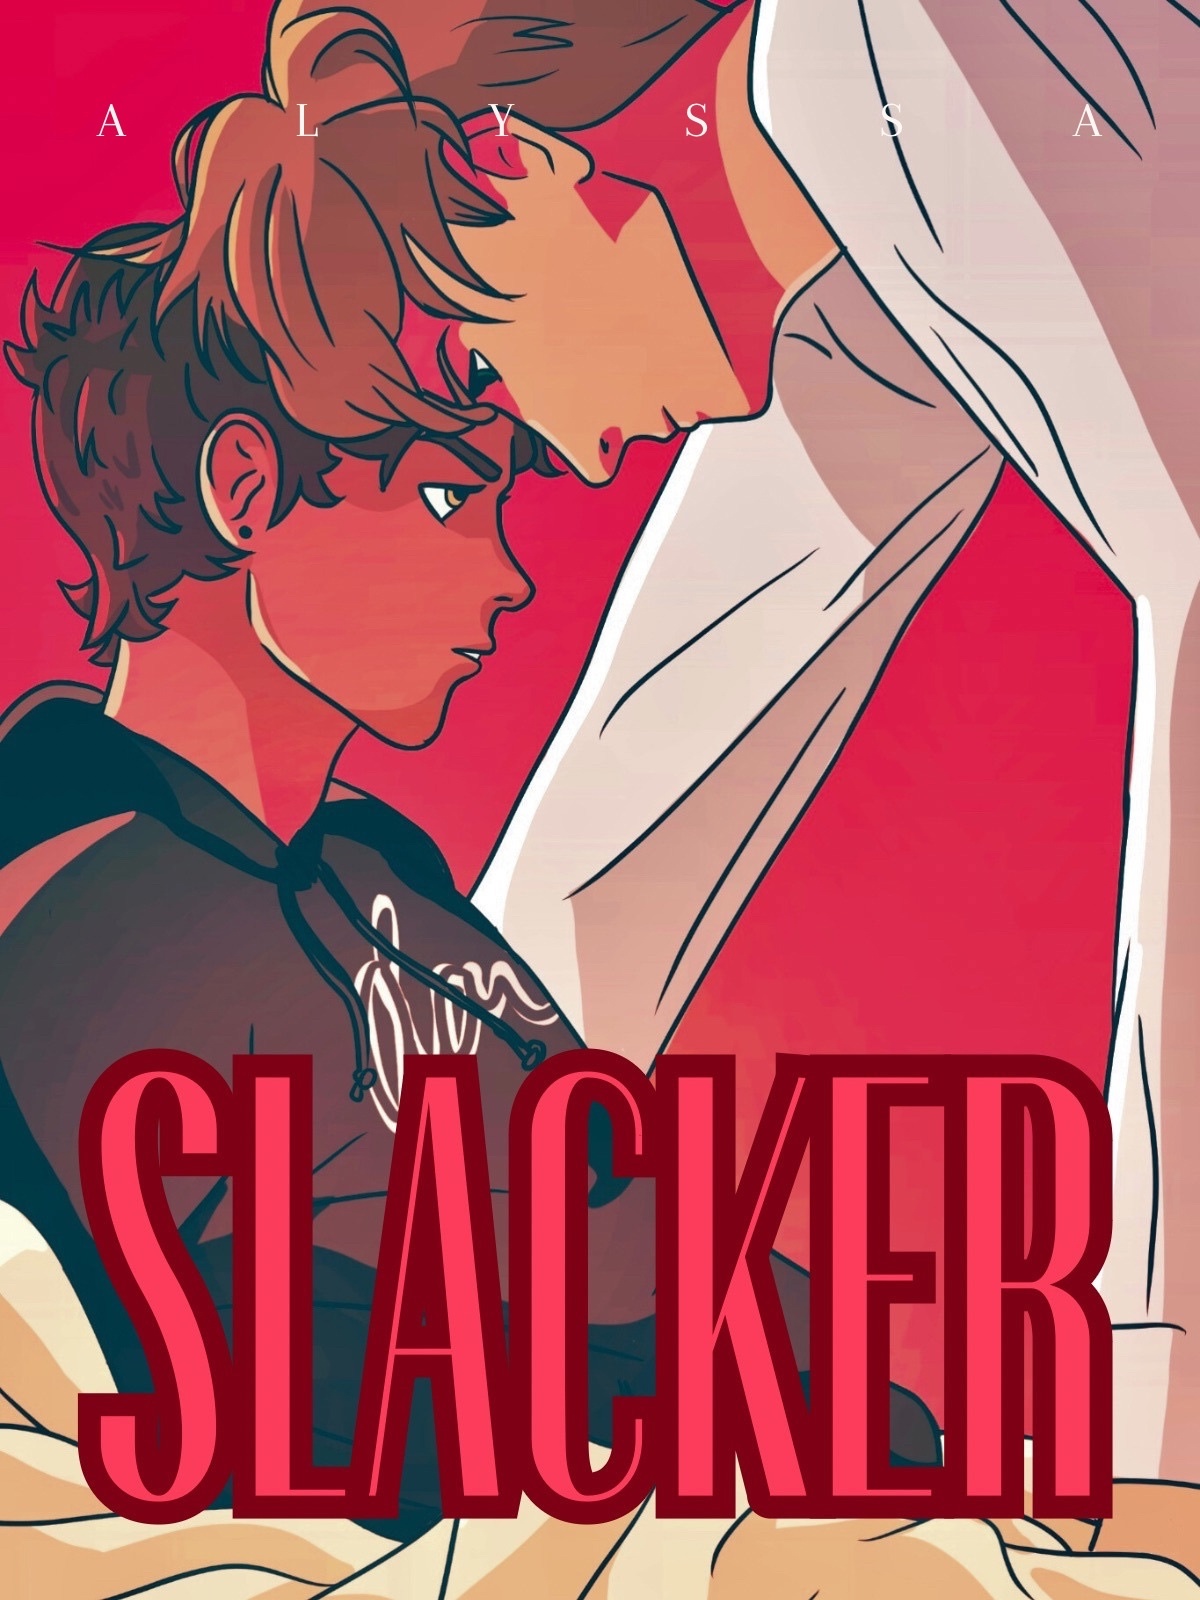 SLACKER [BL]